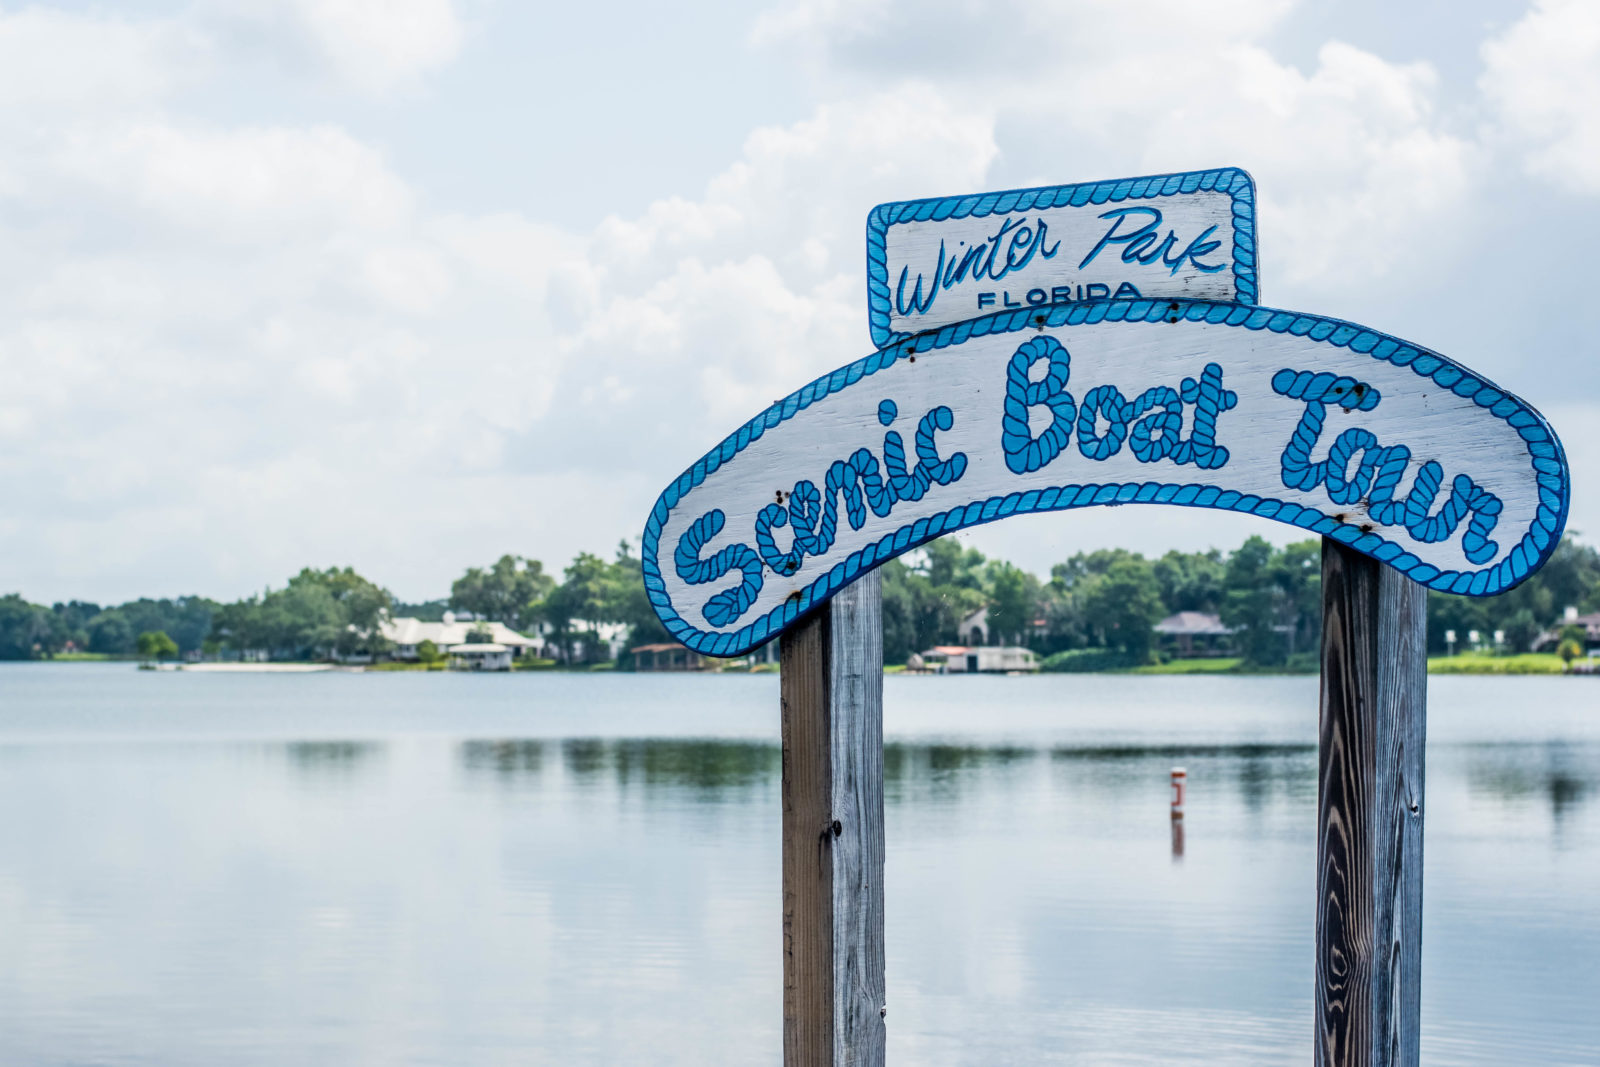 Winter Park Scenic Boat Tour sign.